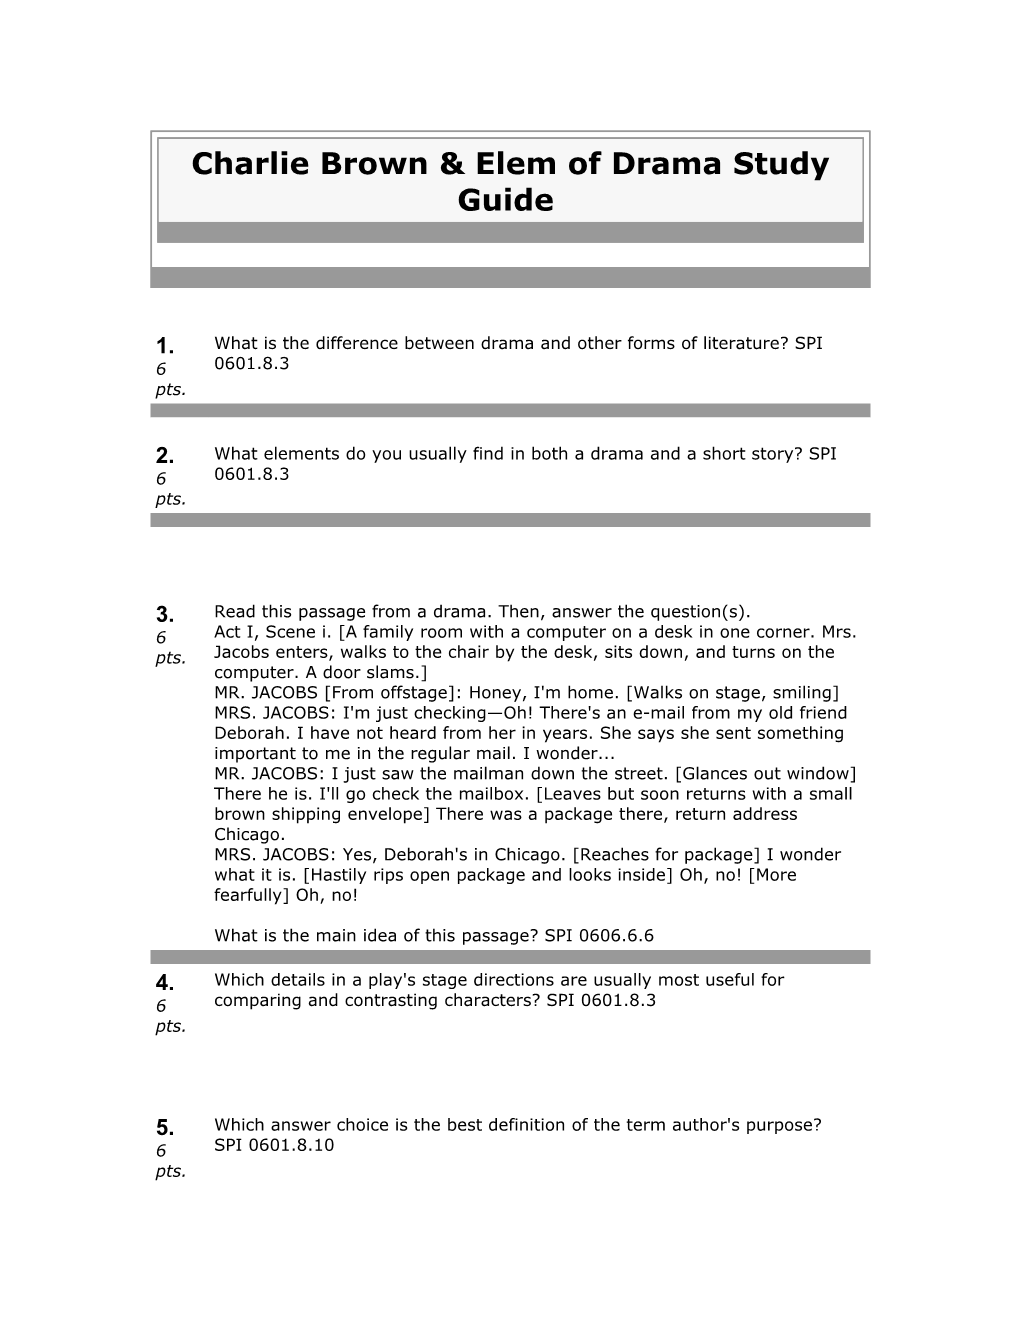 Charlie Brown & Elem of Drama Study Guide